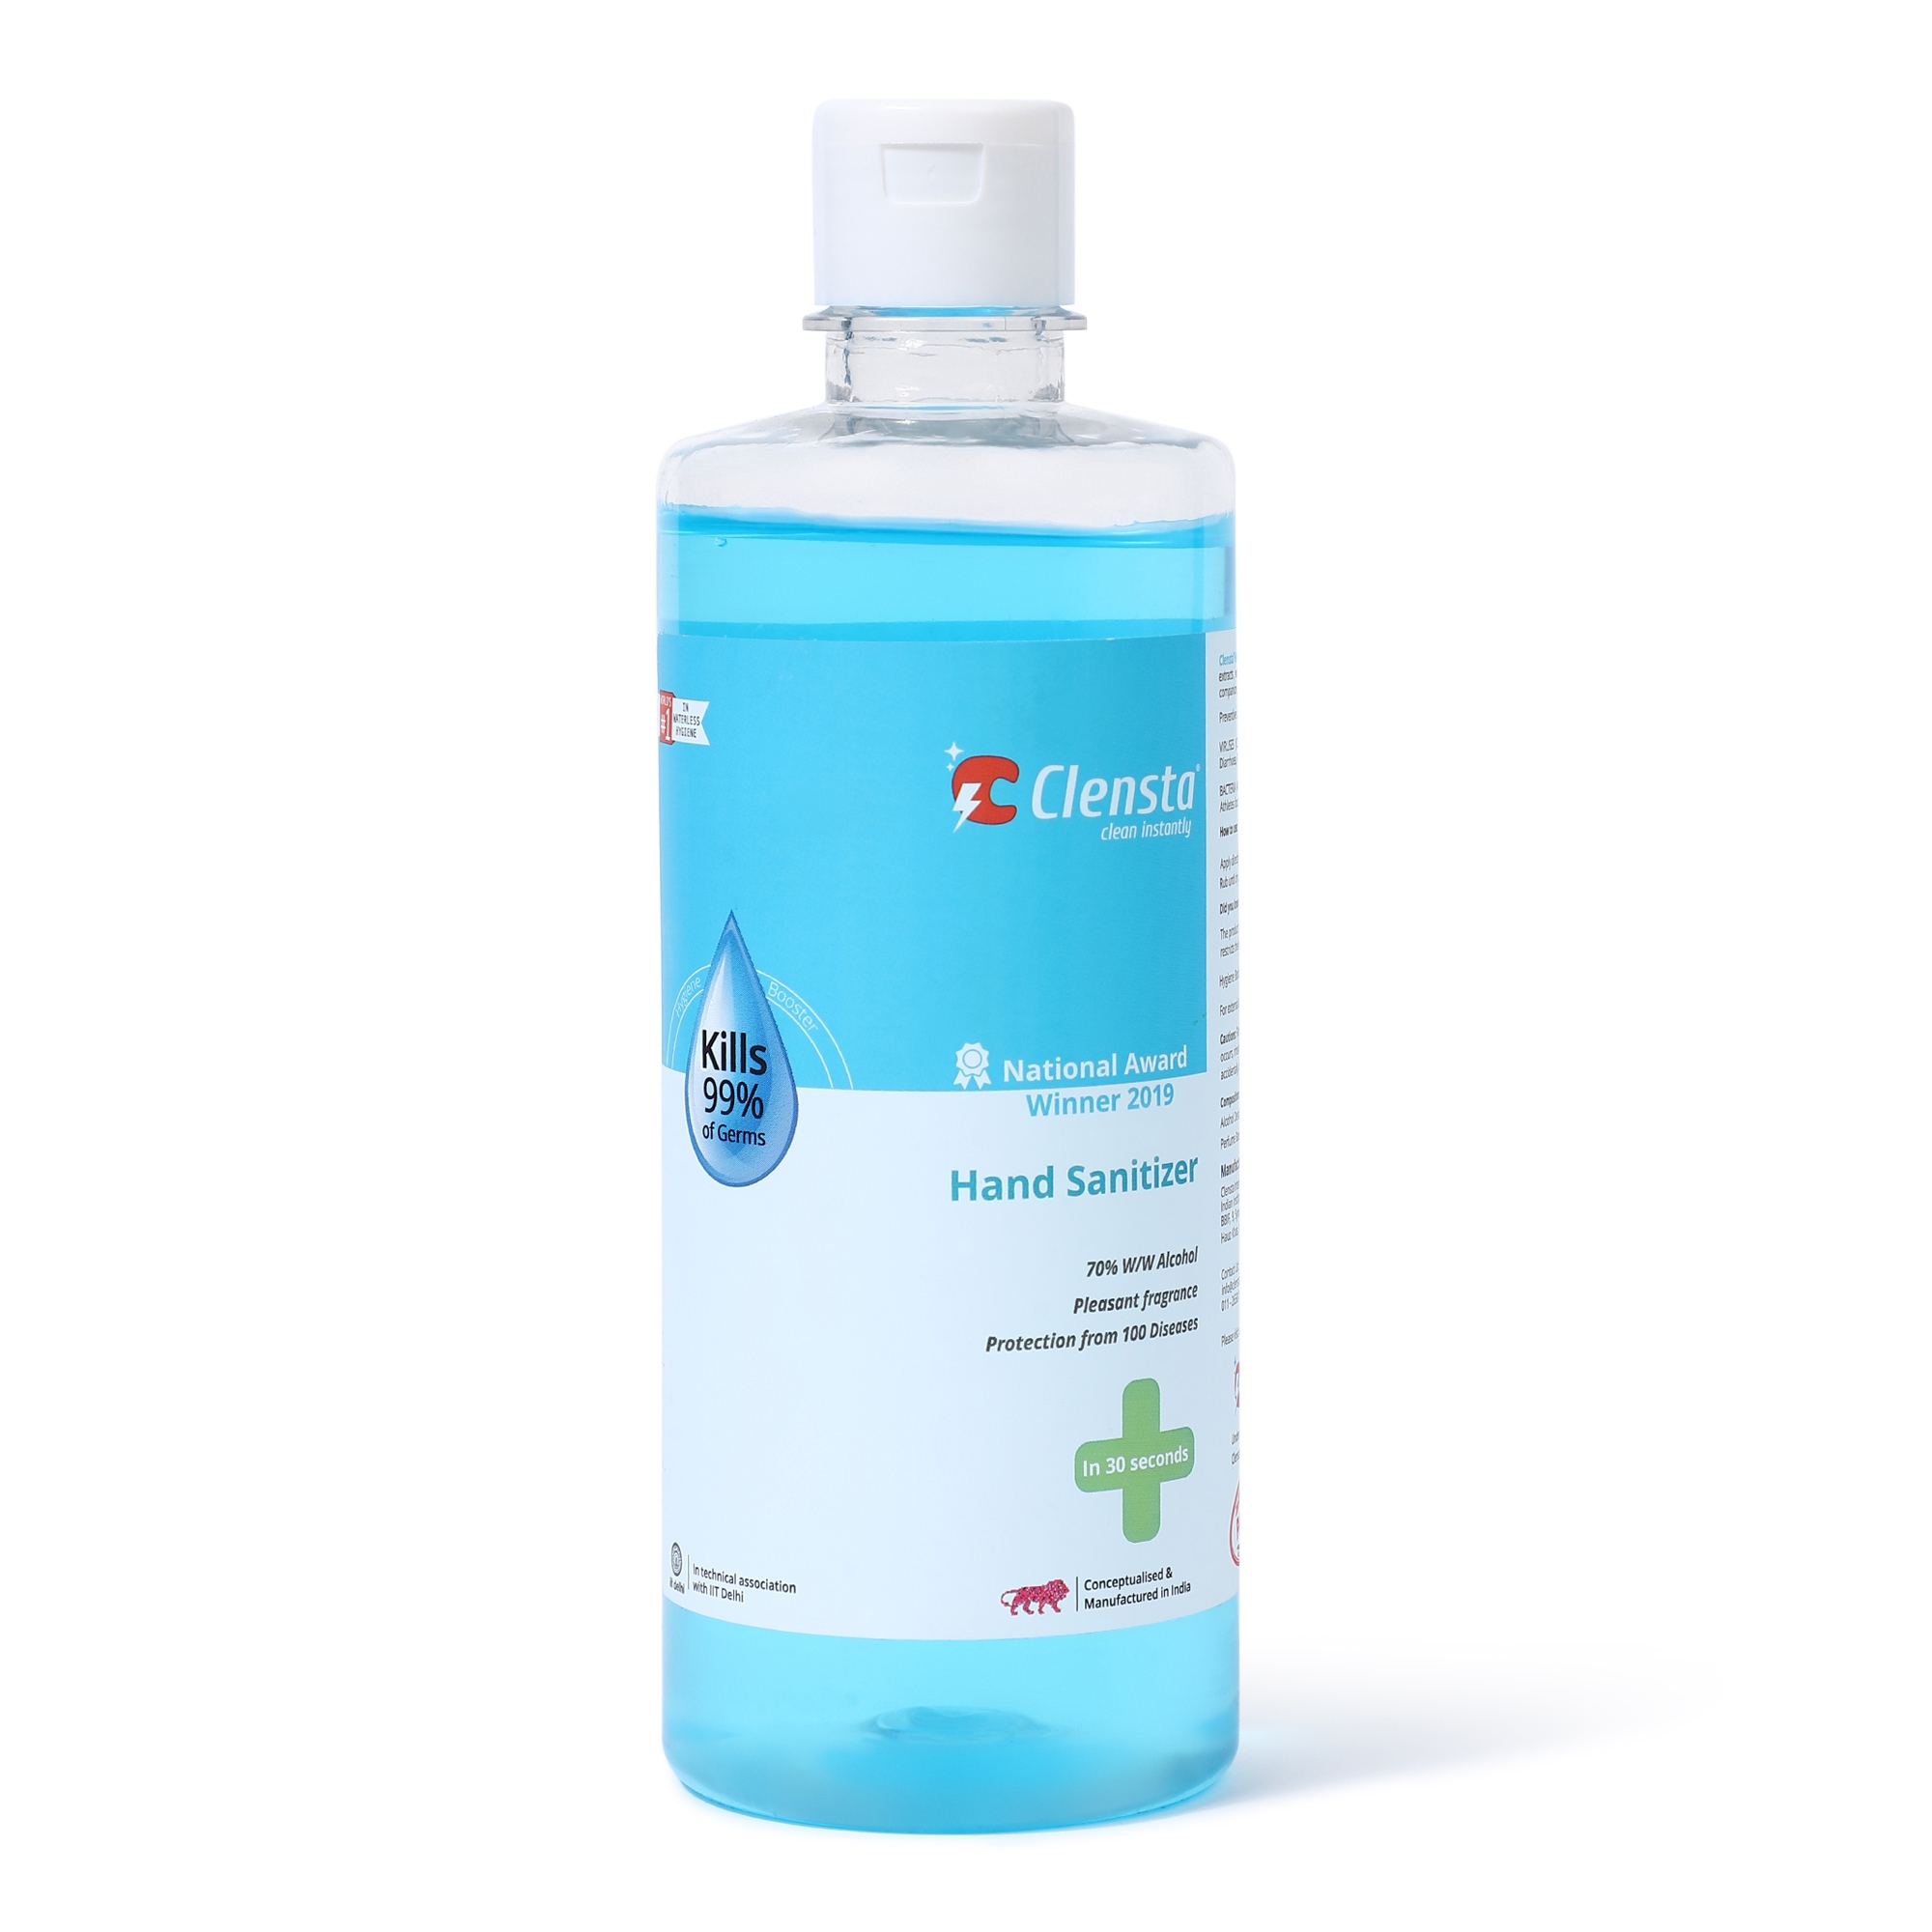 Clensta | Clensta Instant Hand Sanitizer - National Award Winner 2019 | 80% Alcohol Based Sanitizer | Kills 99.95% Germs | WHO Recommended Formula & FDA Approved 100 ml